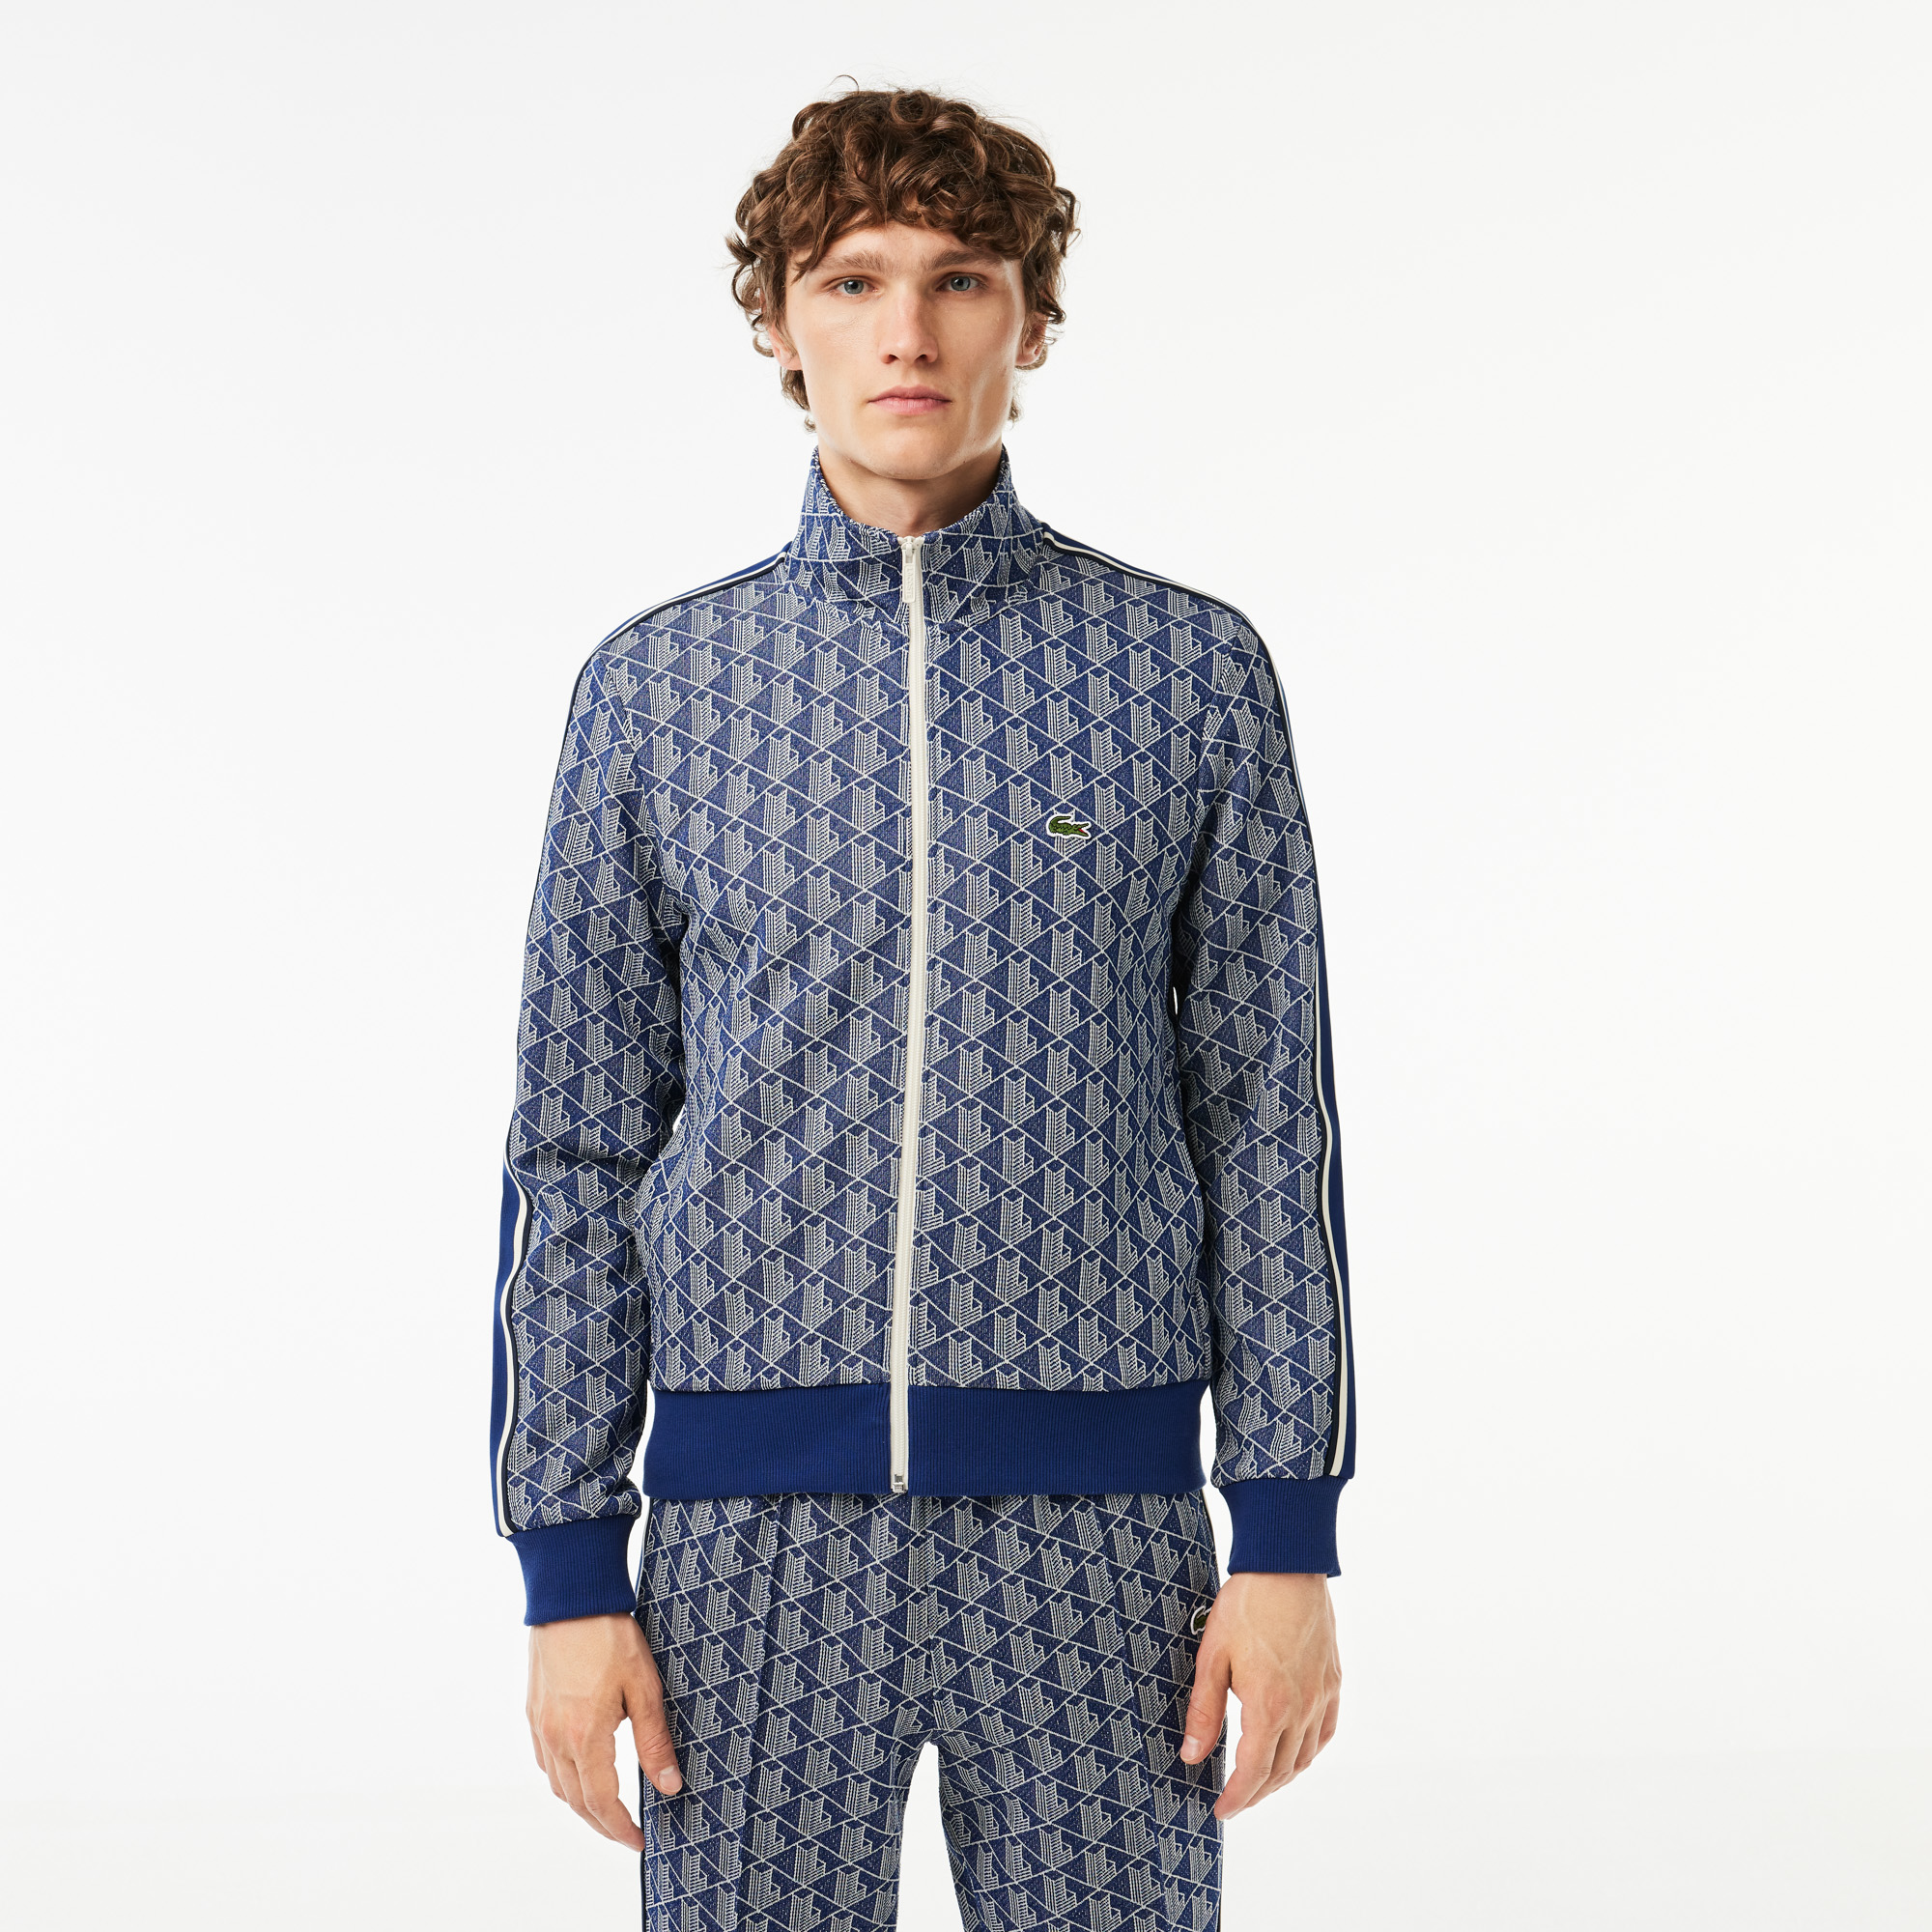 Louis Vuitton, Intimates & Sleepwear, Louis Vuitton Monogram Pajamas